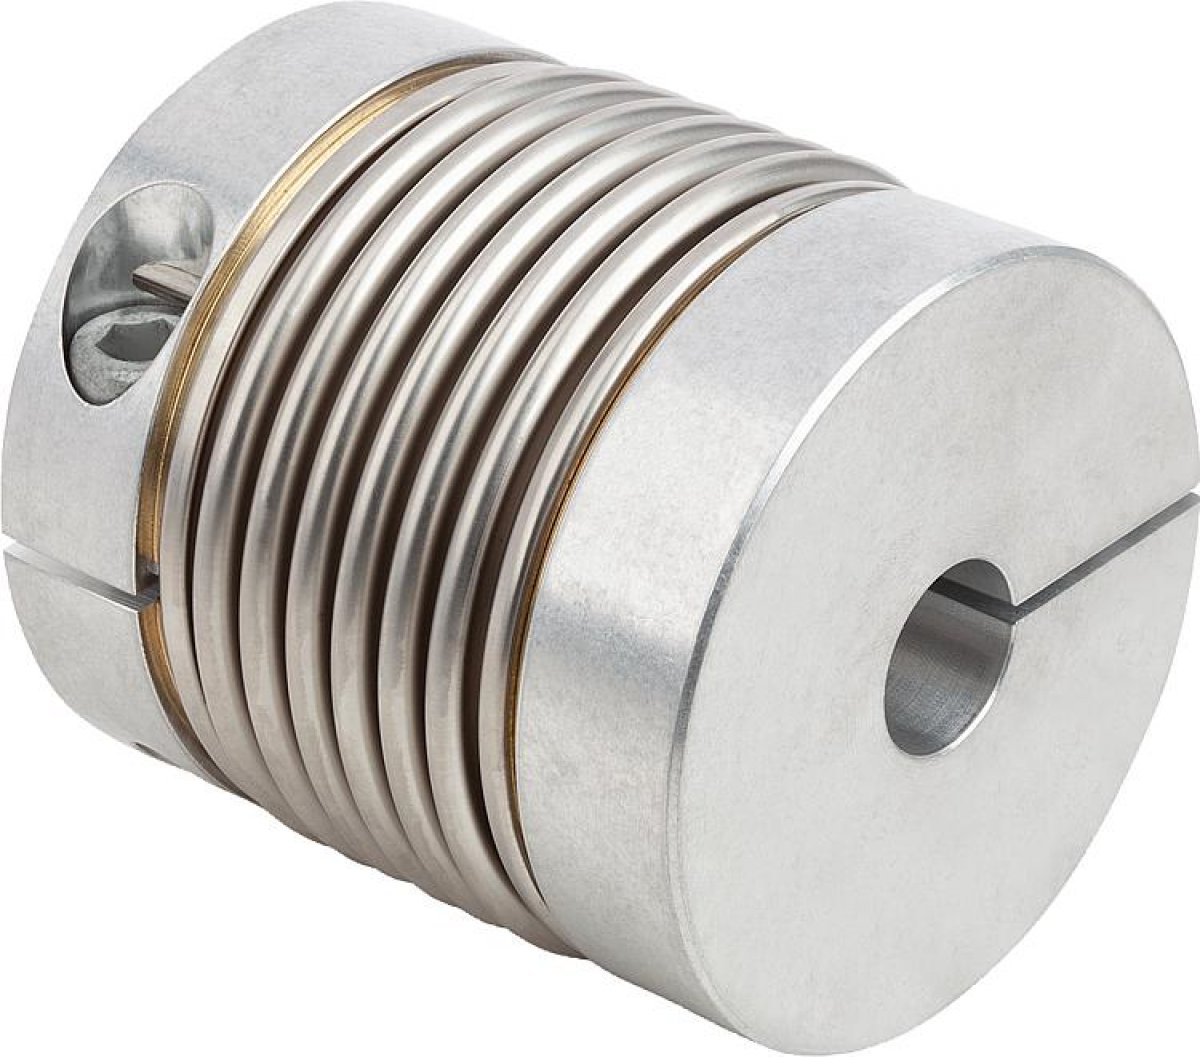 Metal bellows couplings with radial clamping hub